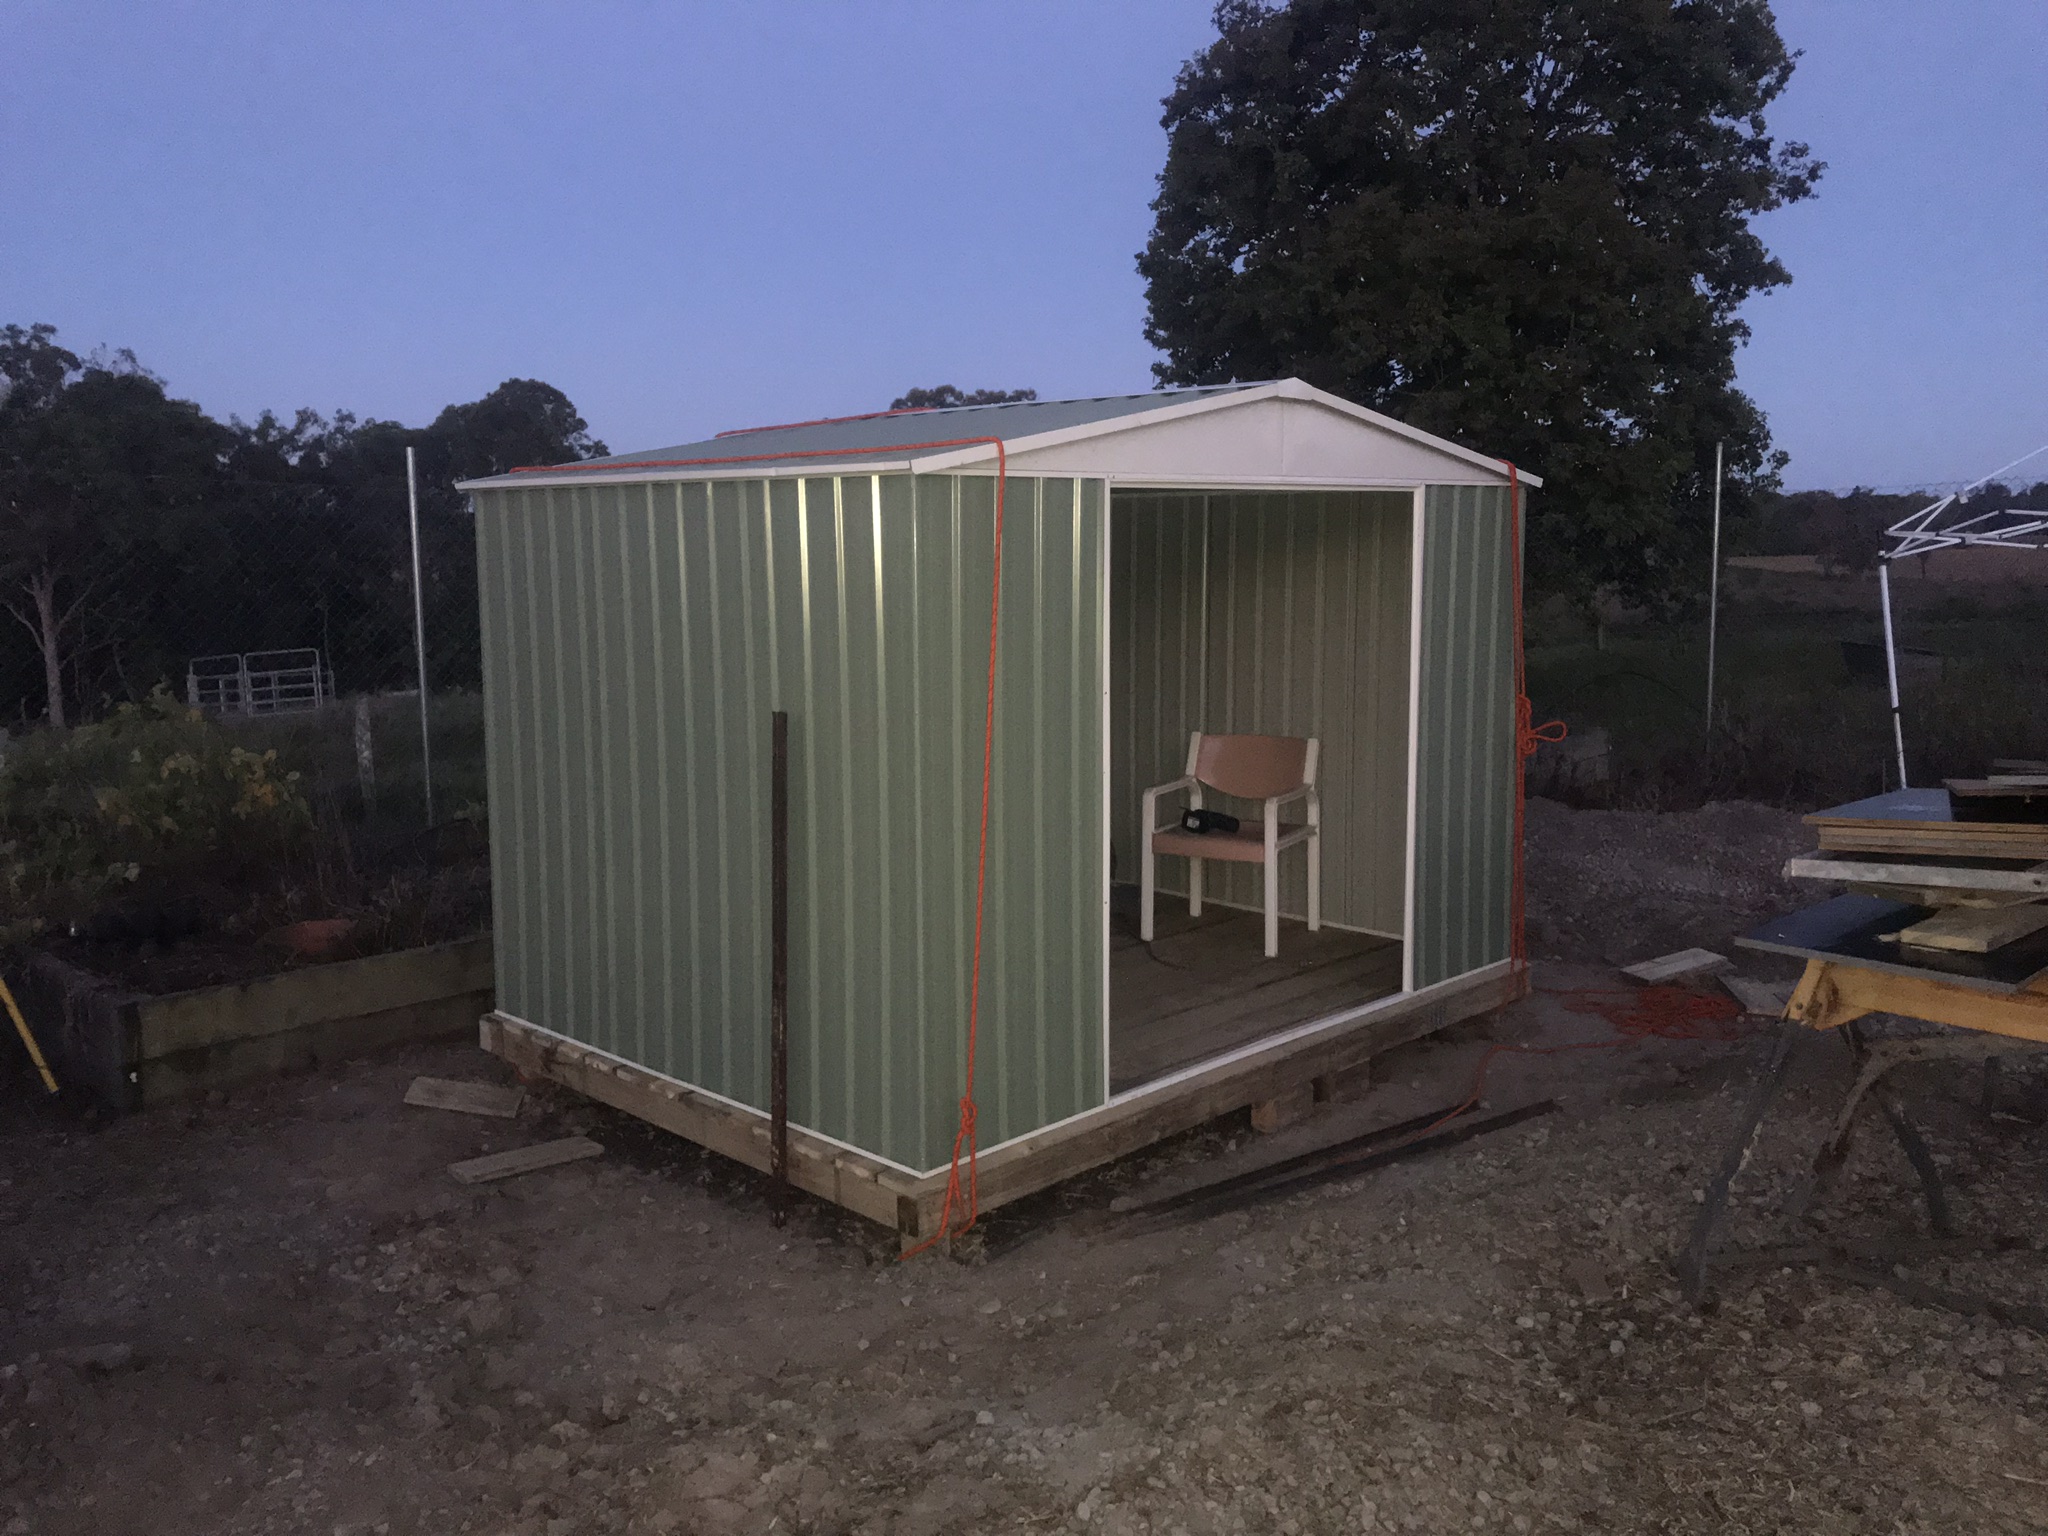 New garden shed | Bunnings Workshop community